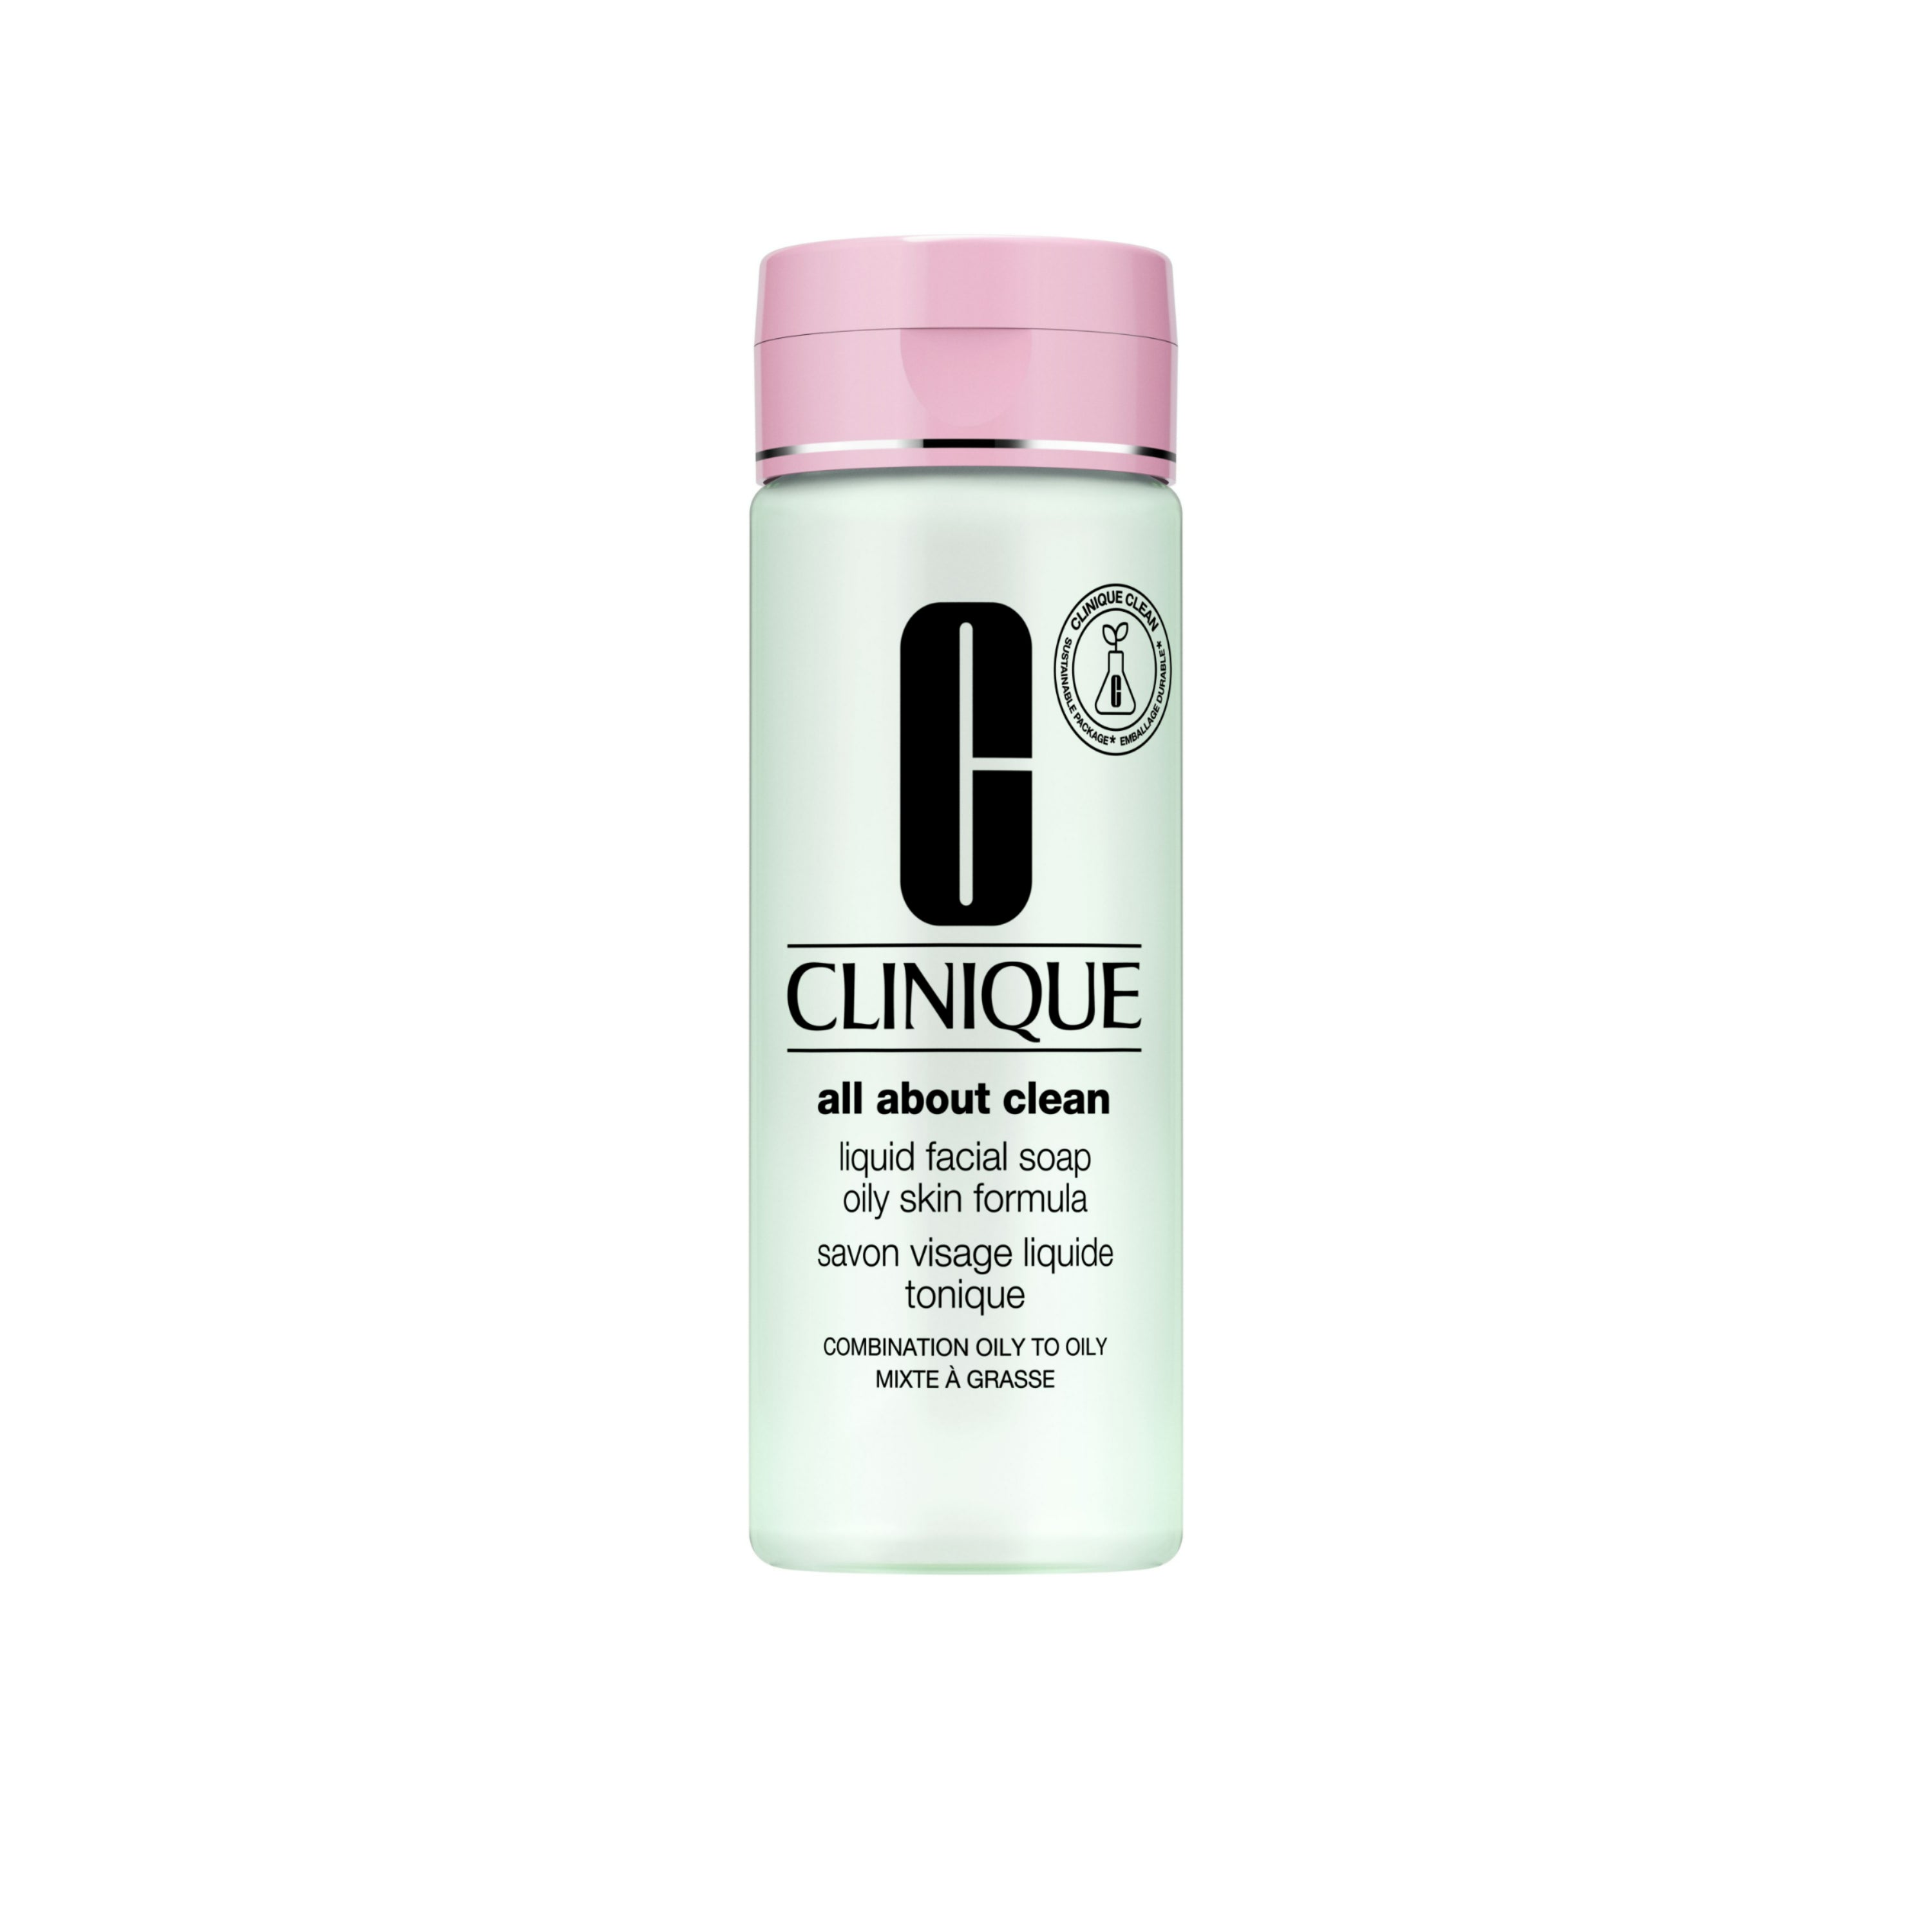 CLINIQUE Liquid Facial Soap (Oily Skin Formula) 200ml